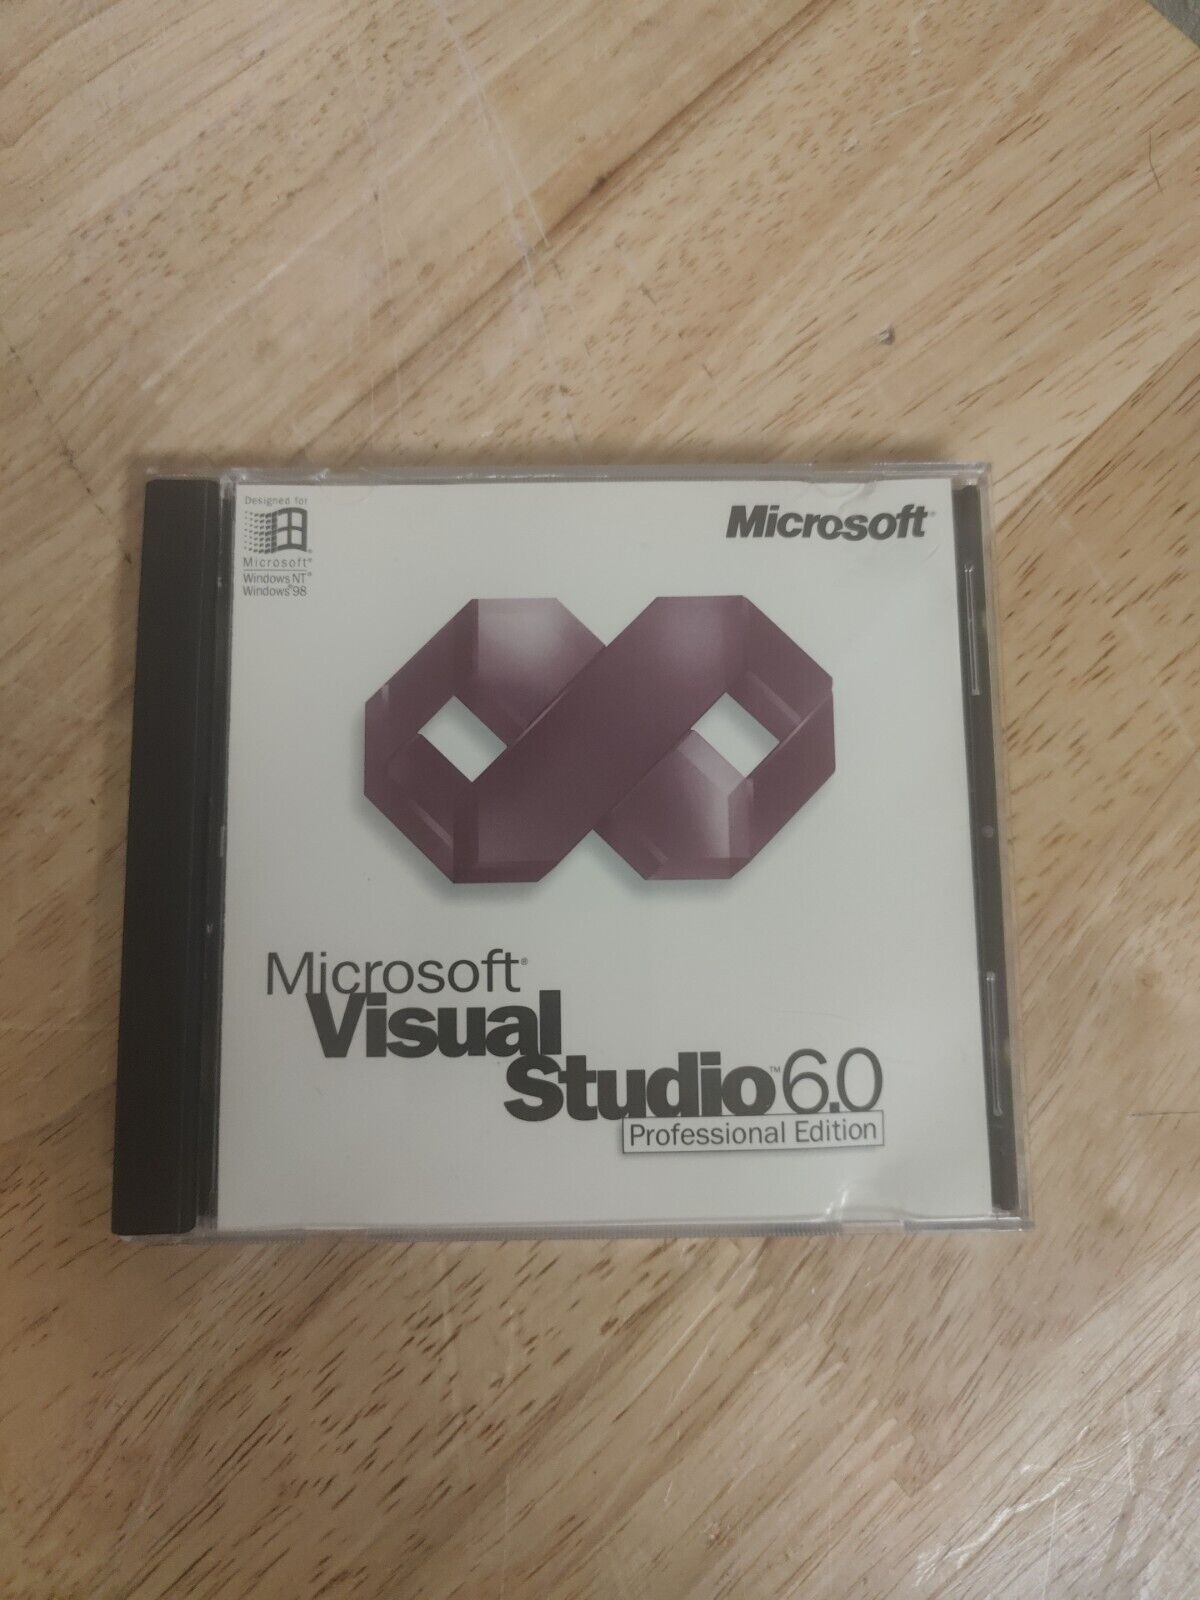 Microsoft Visual Studio 6.0 Professional Edition with CD Key (Windows NT / 98)